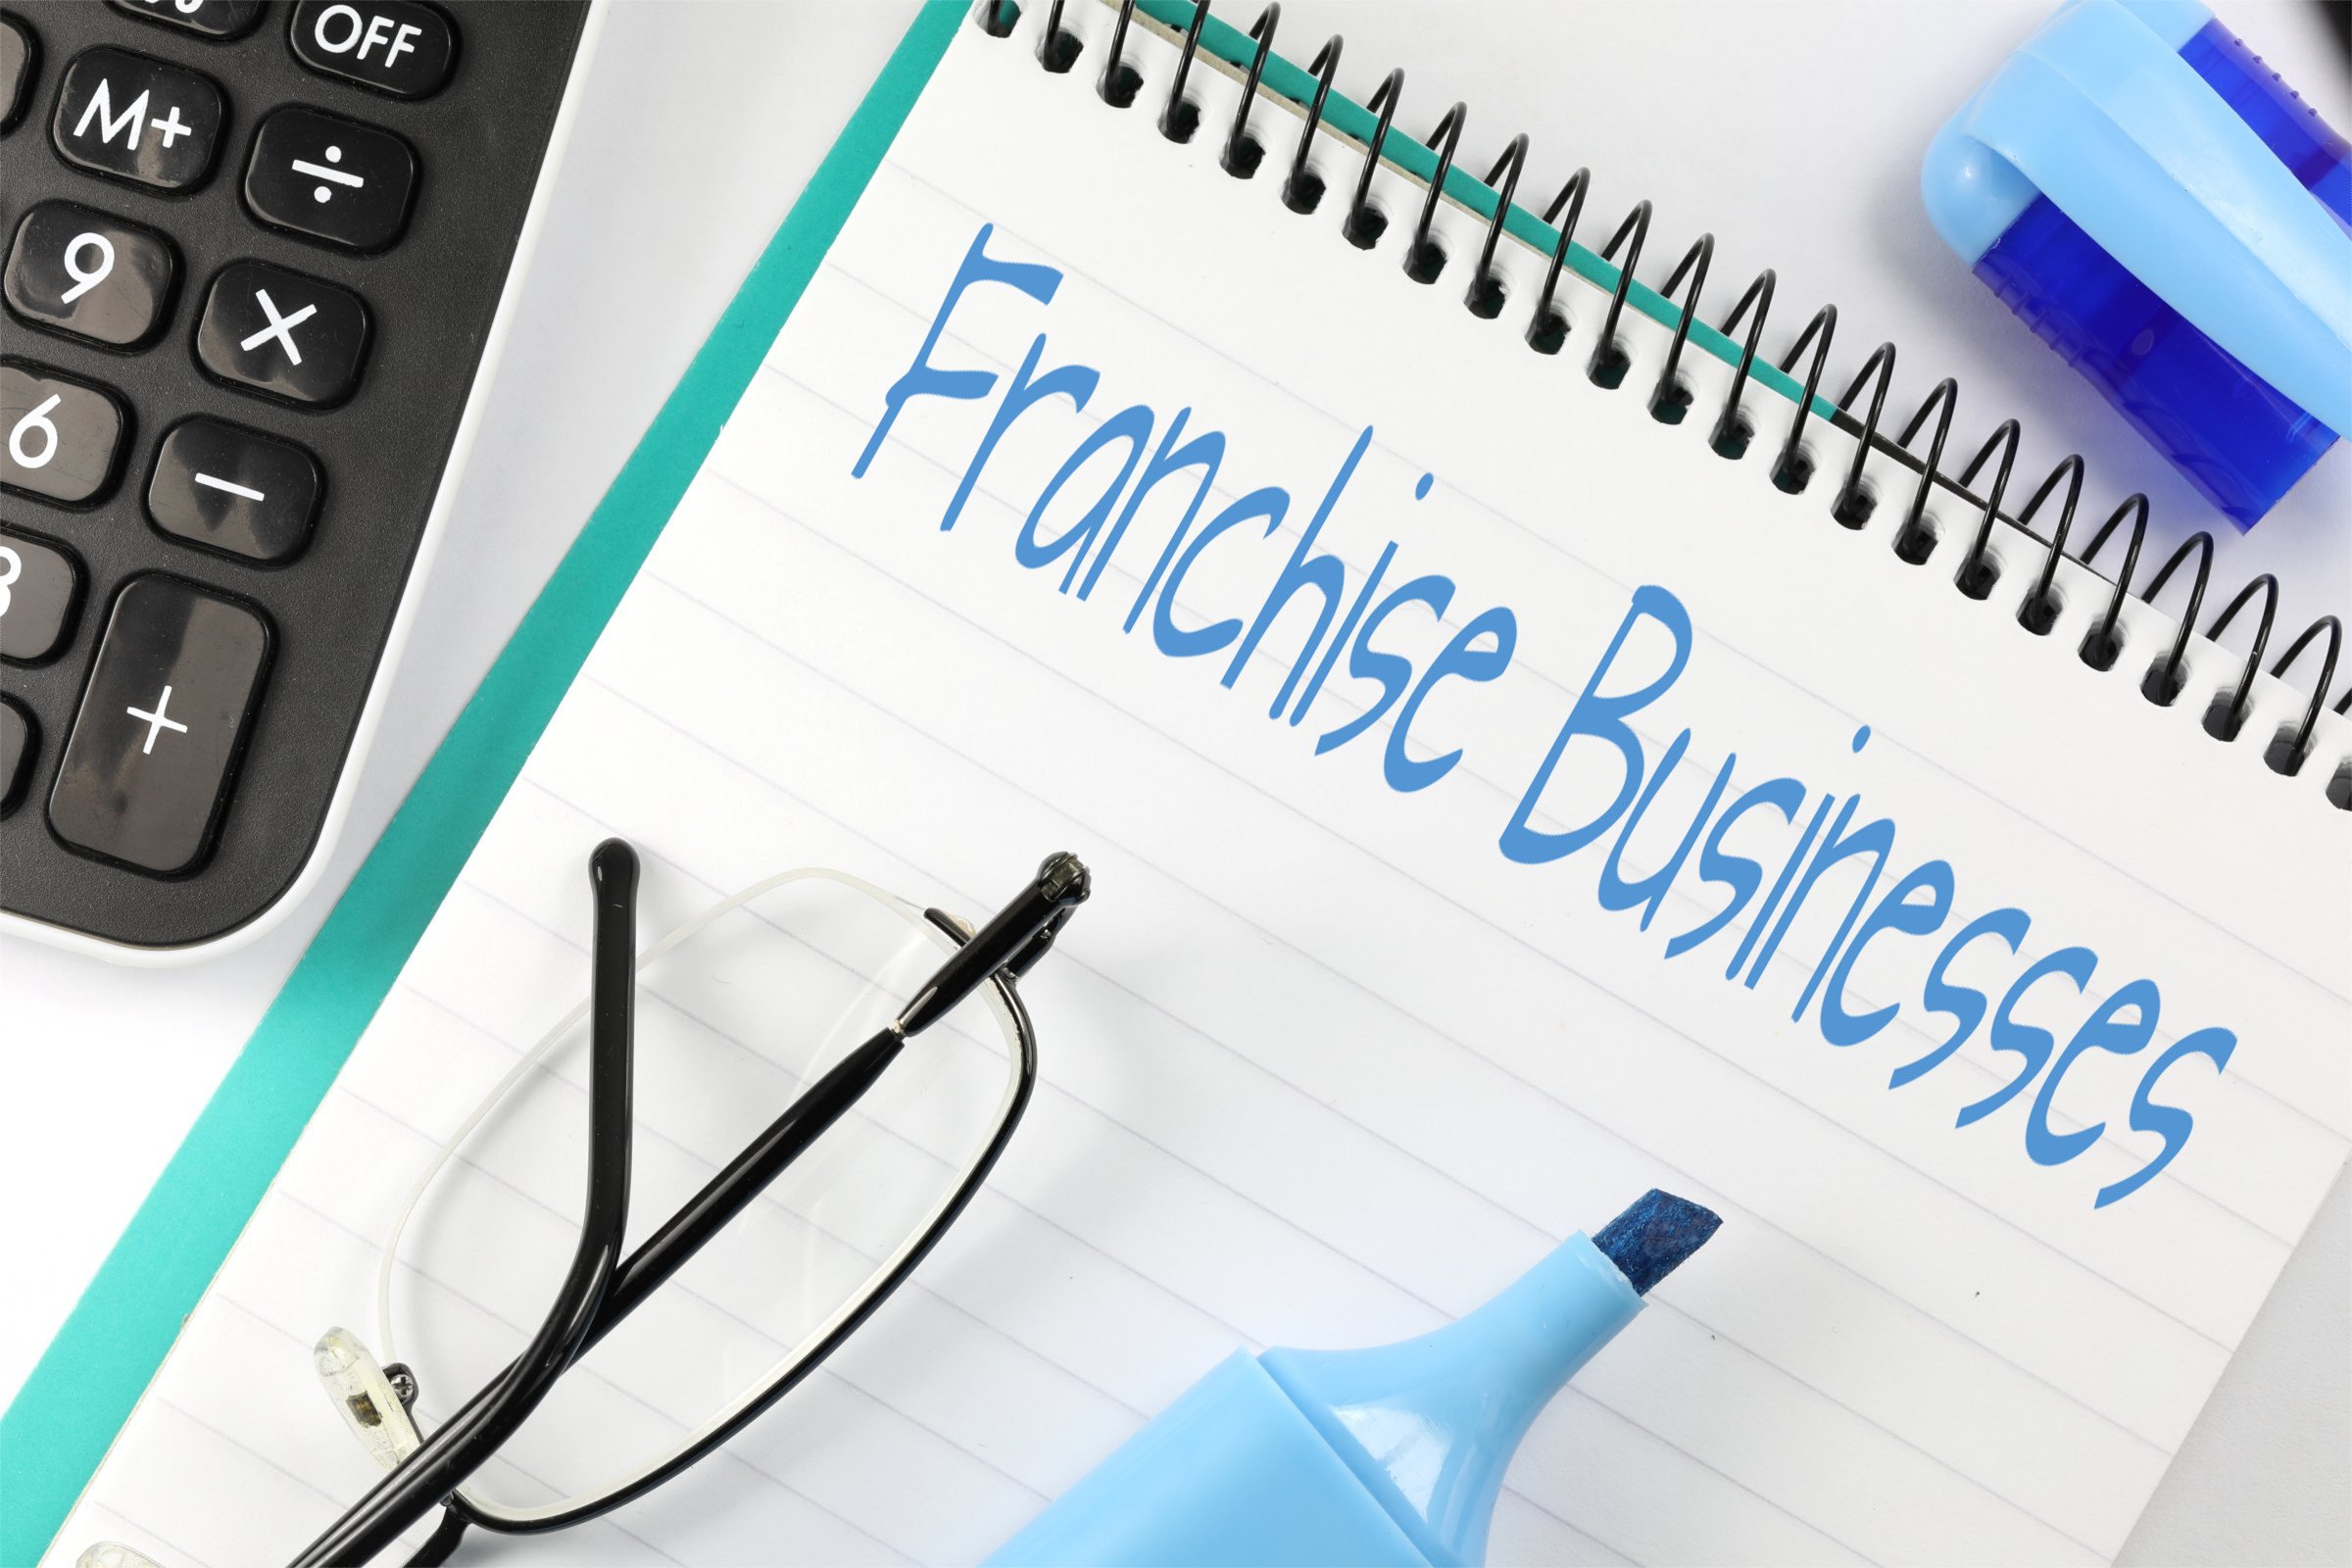 franchise businesses